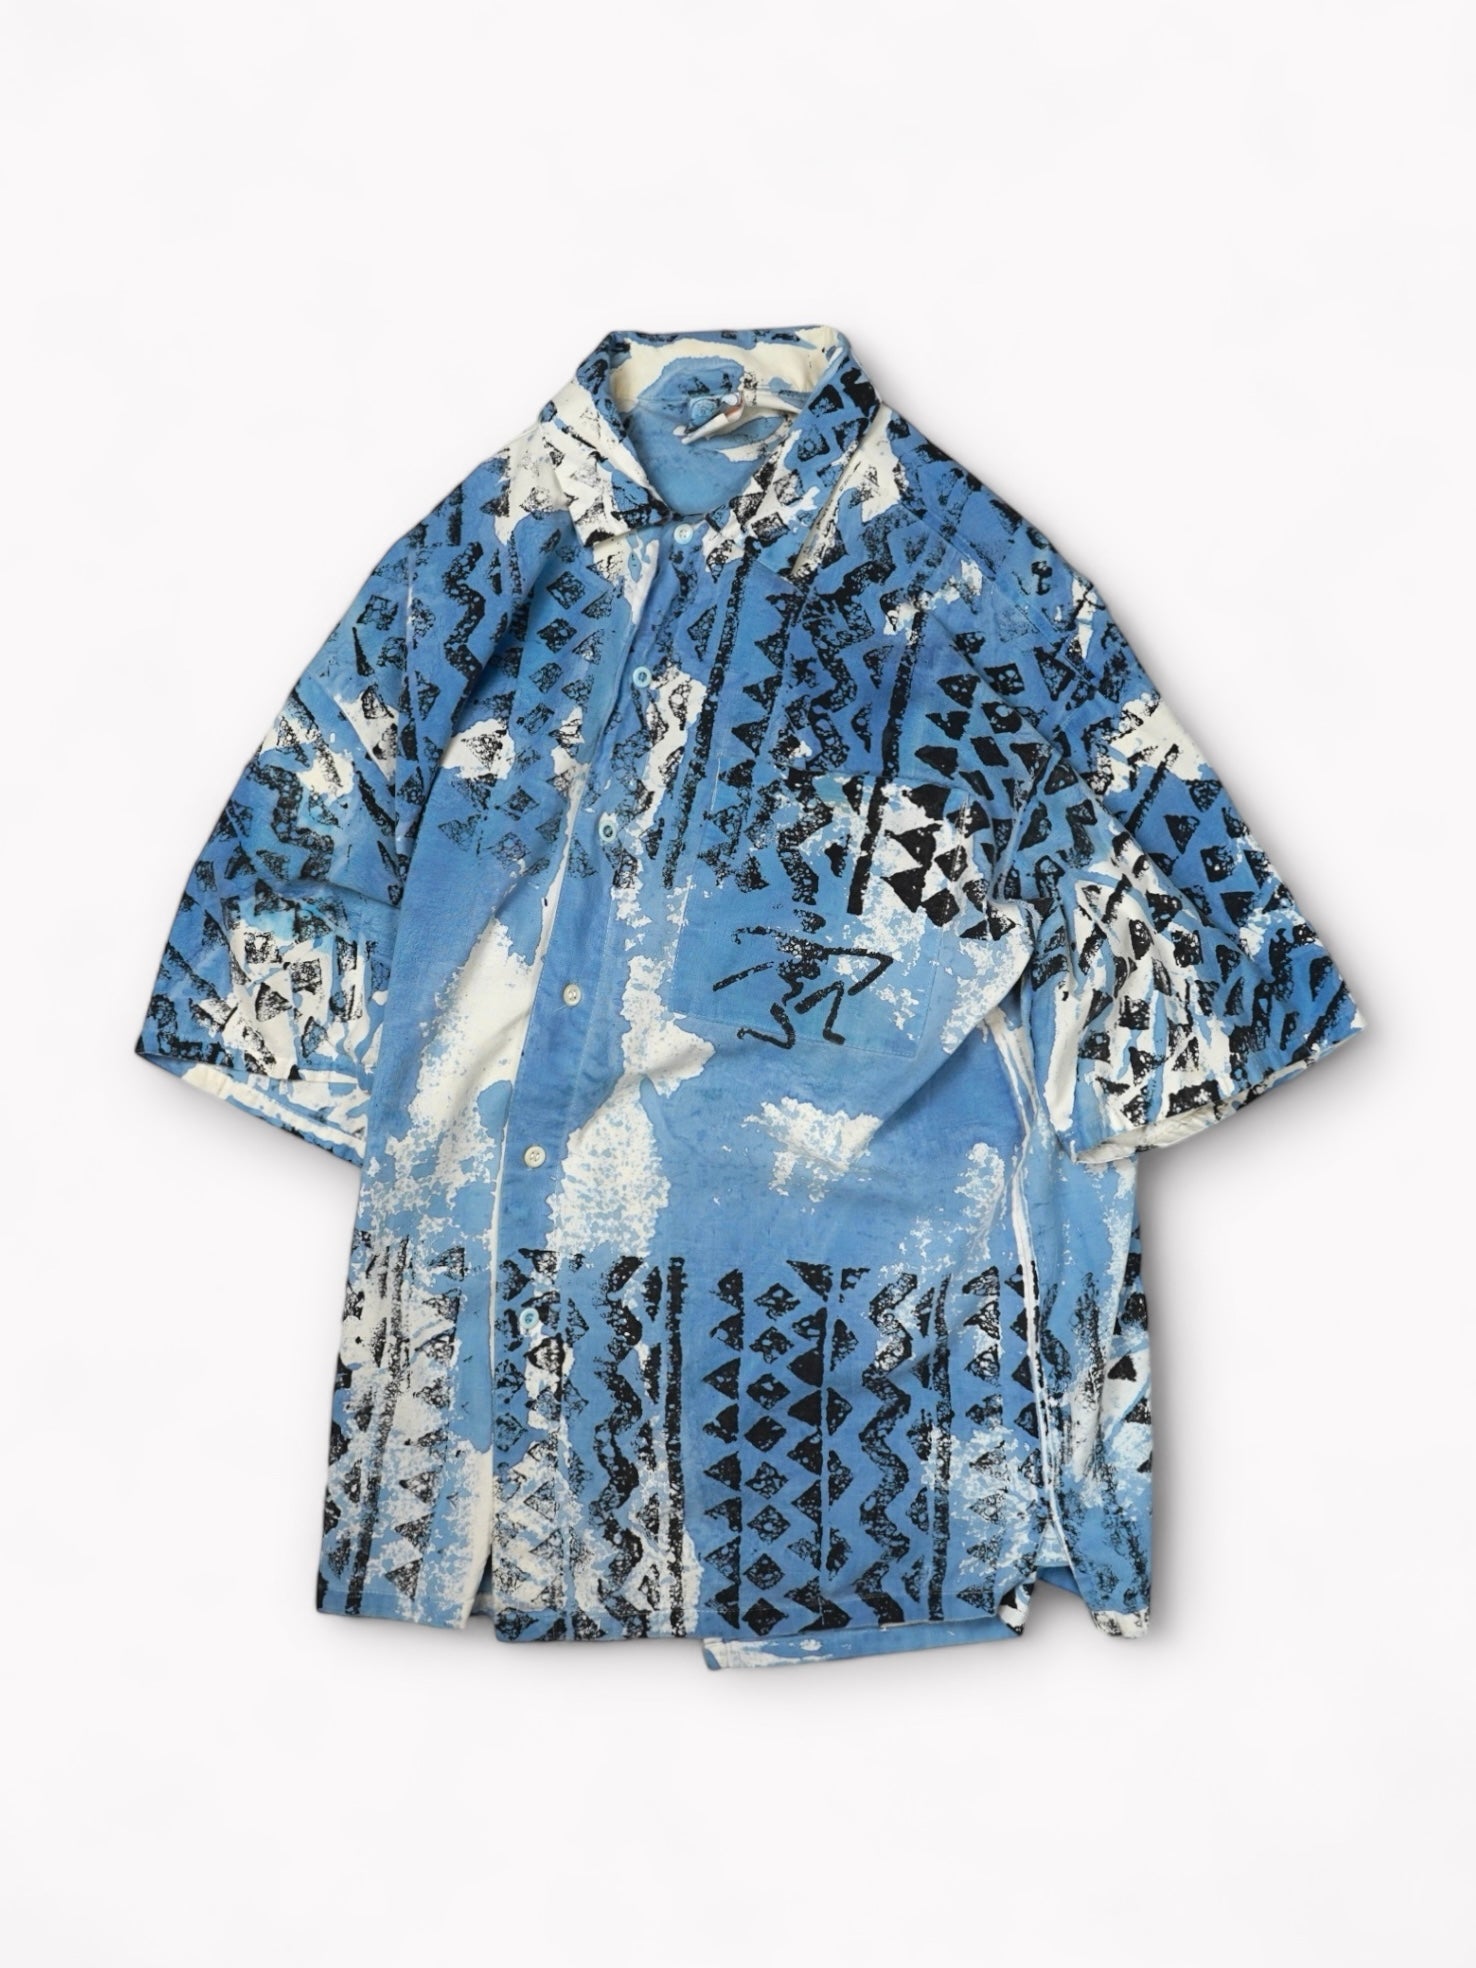 90's Ocean Pacific Cotton all over print shirt made in USA【XL】오션 퍼시픽 코튼 반소매 셔츠